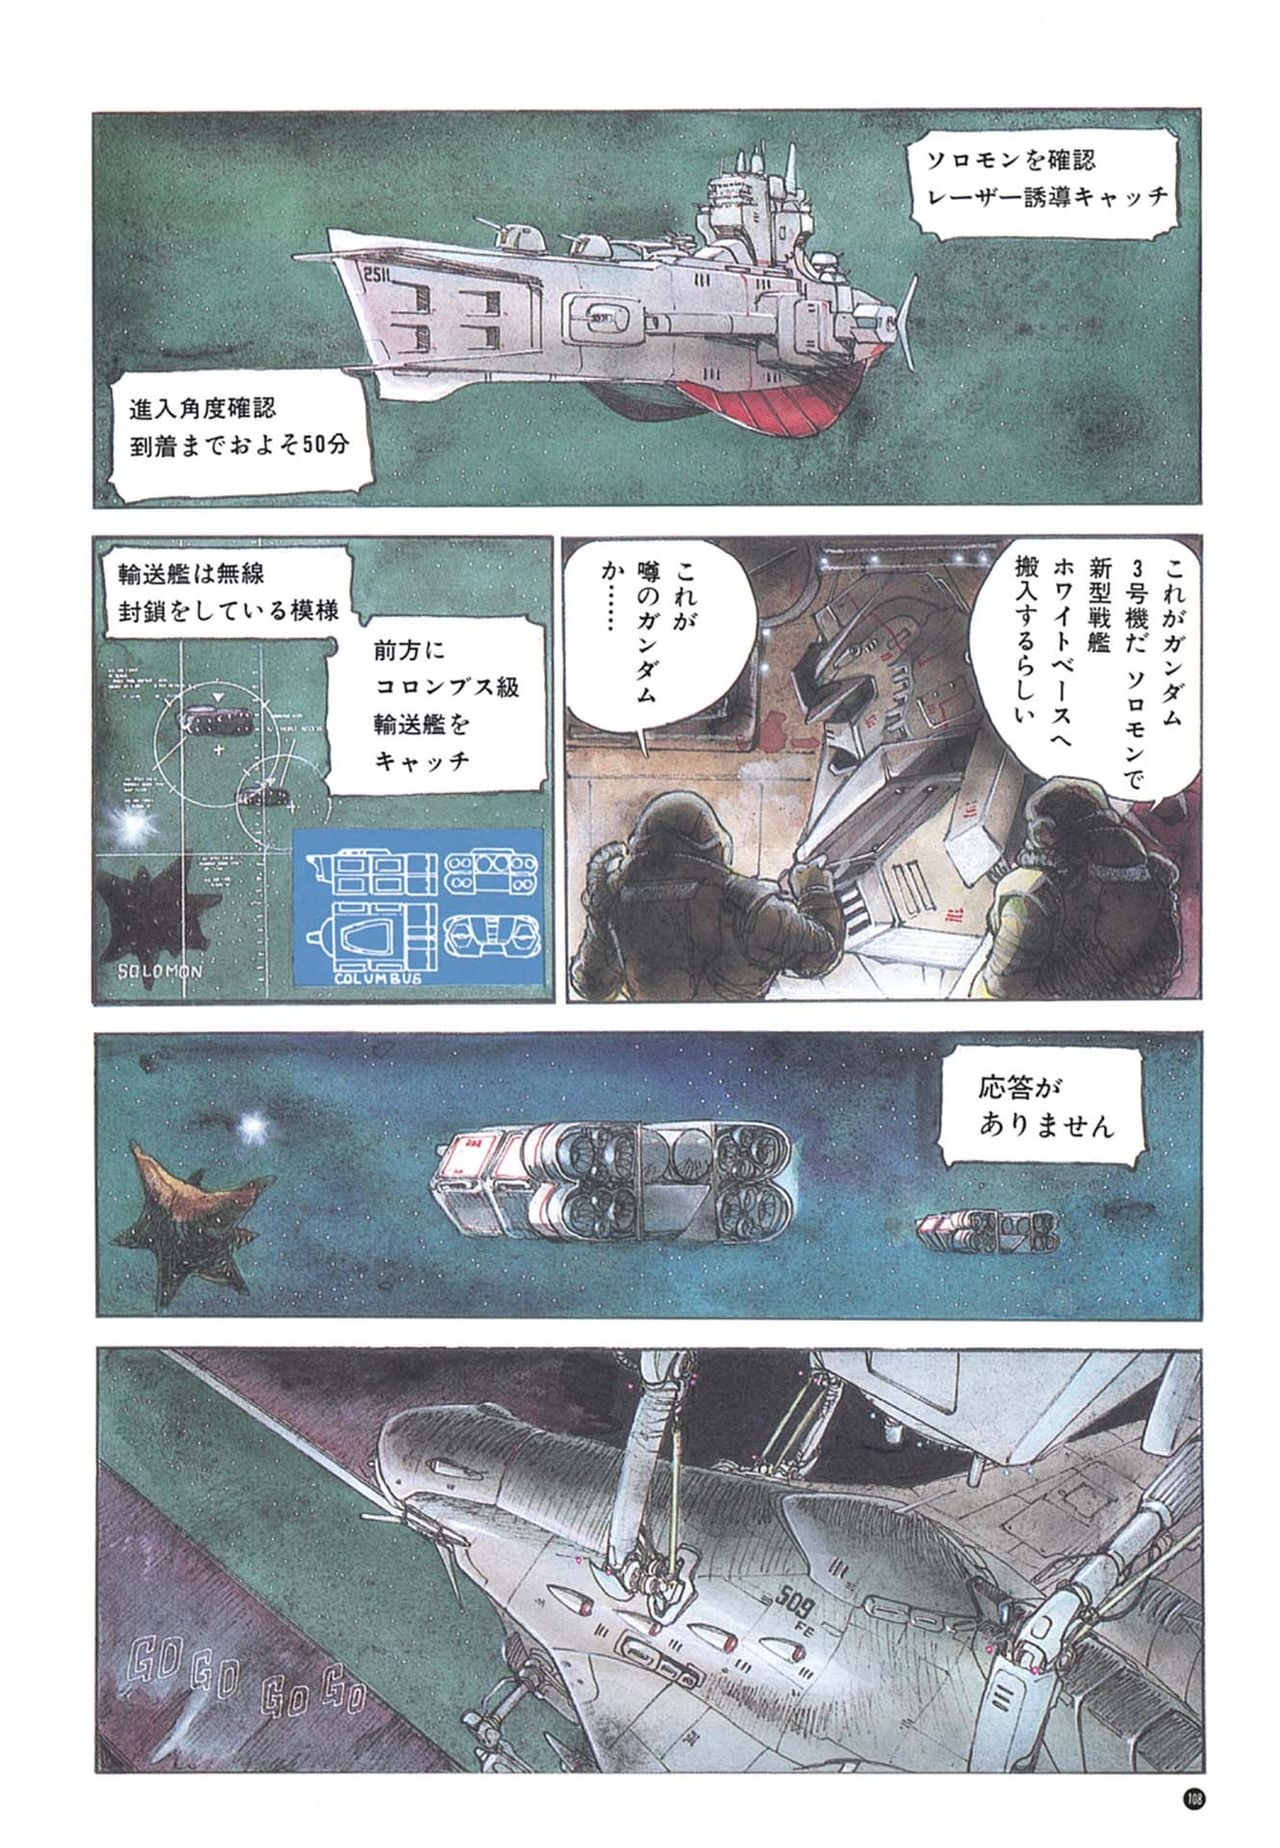 [Kazuhisa Kondo] Kazuhisa Kondo 2D & 3D Works - Go Ahead - From Mobile Suit Gundam to Original Mechanism 107